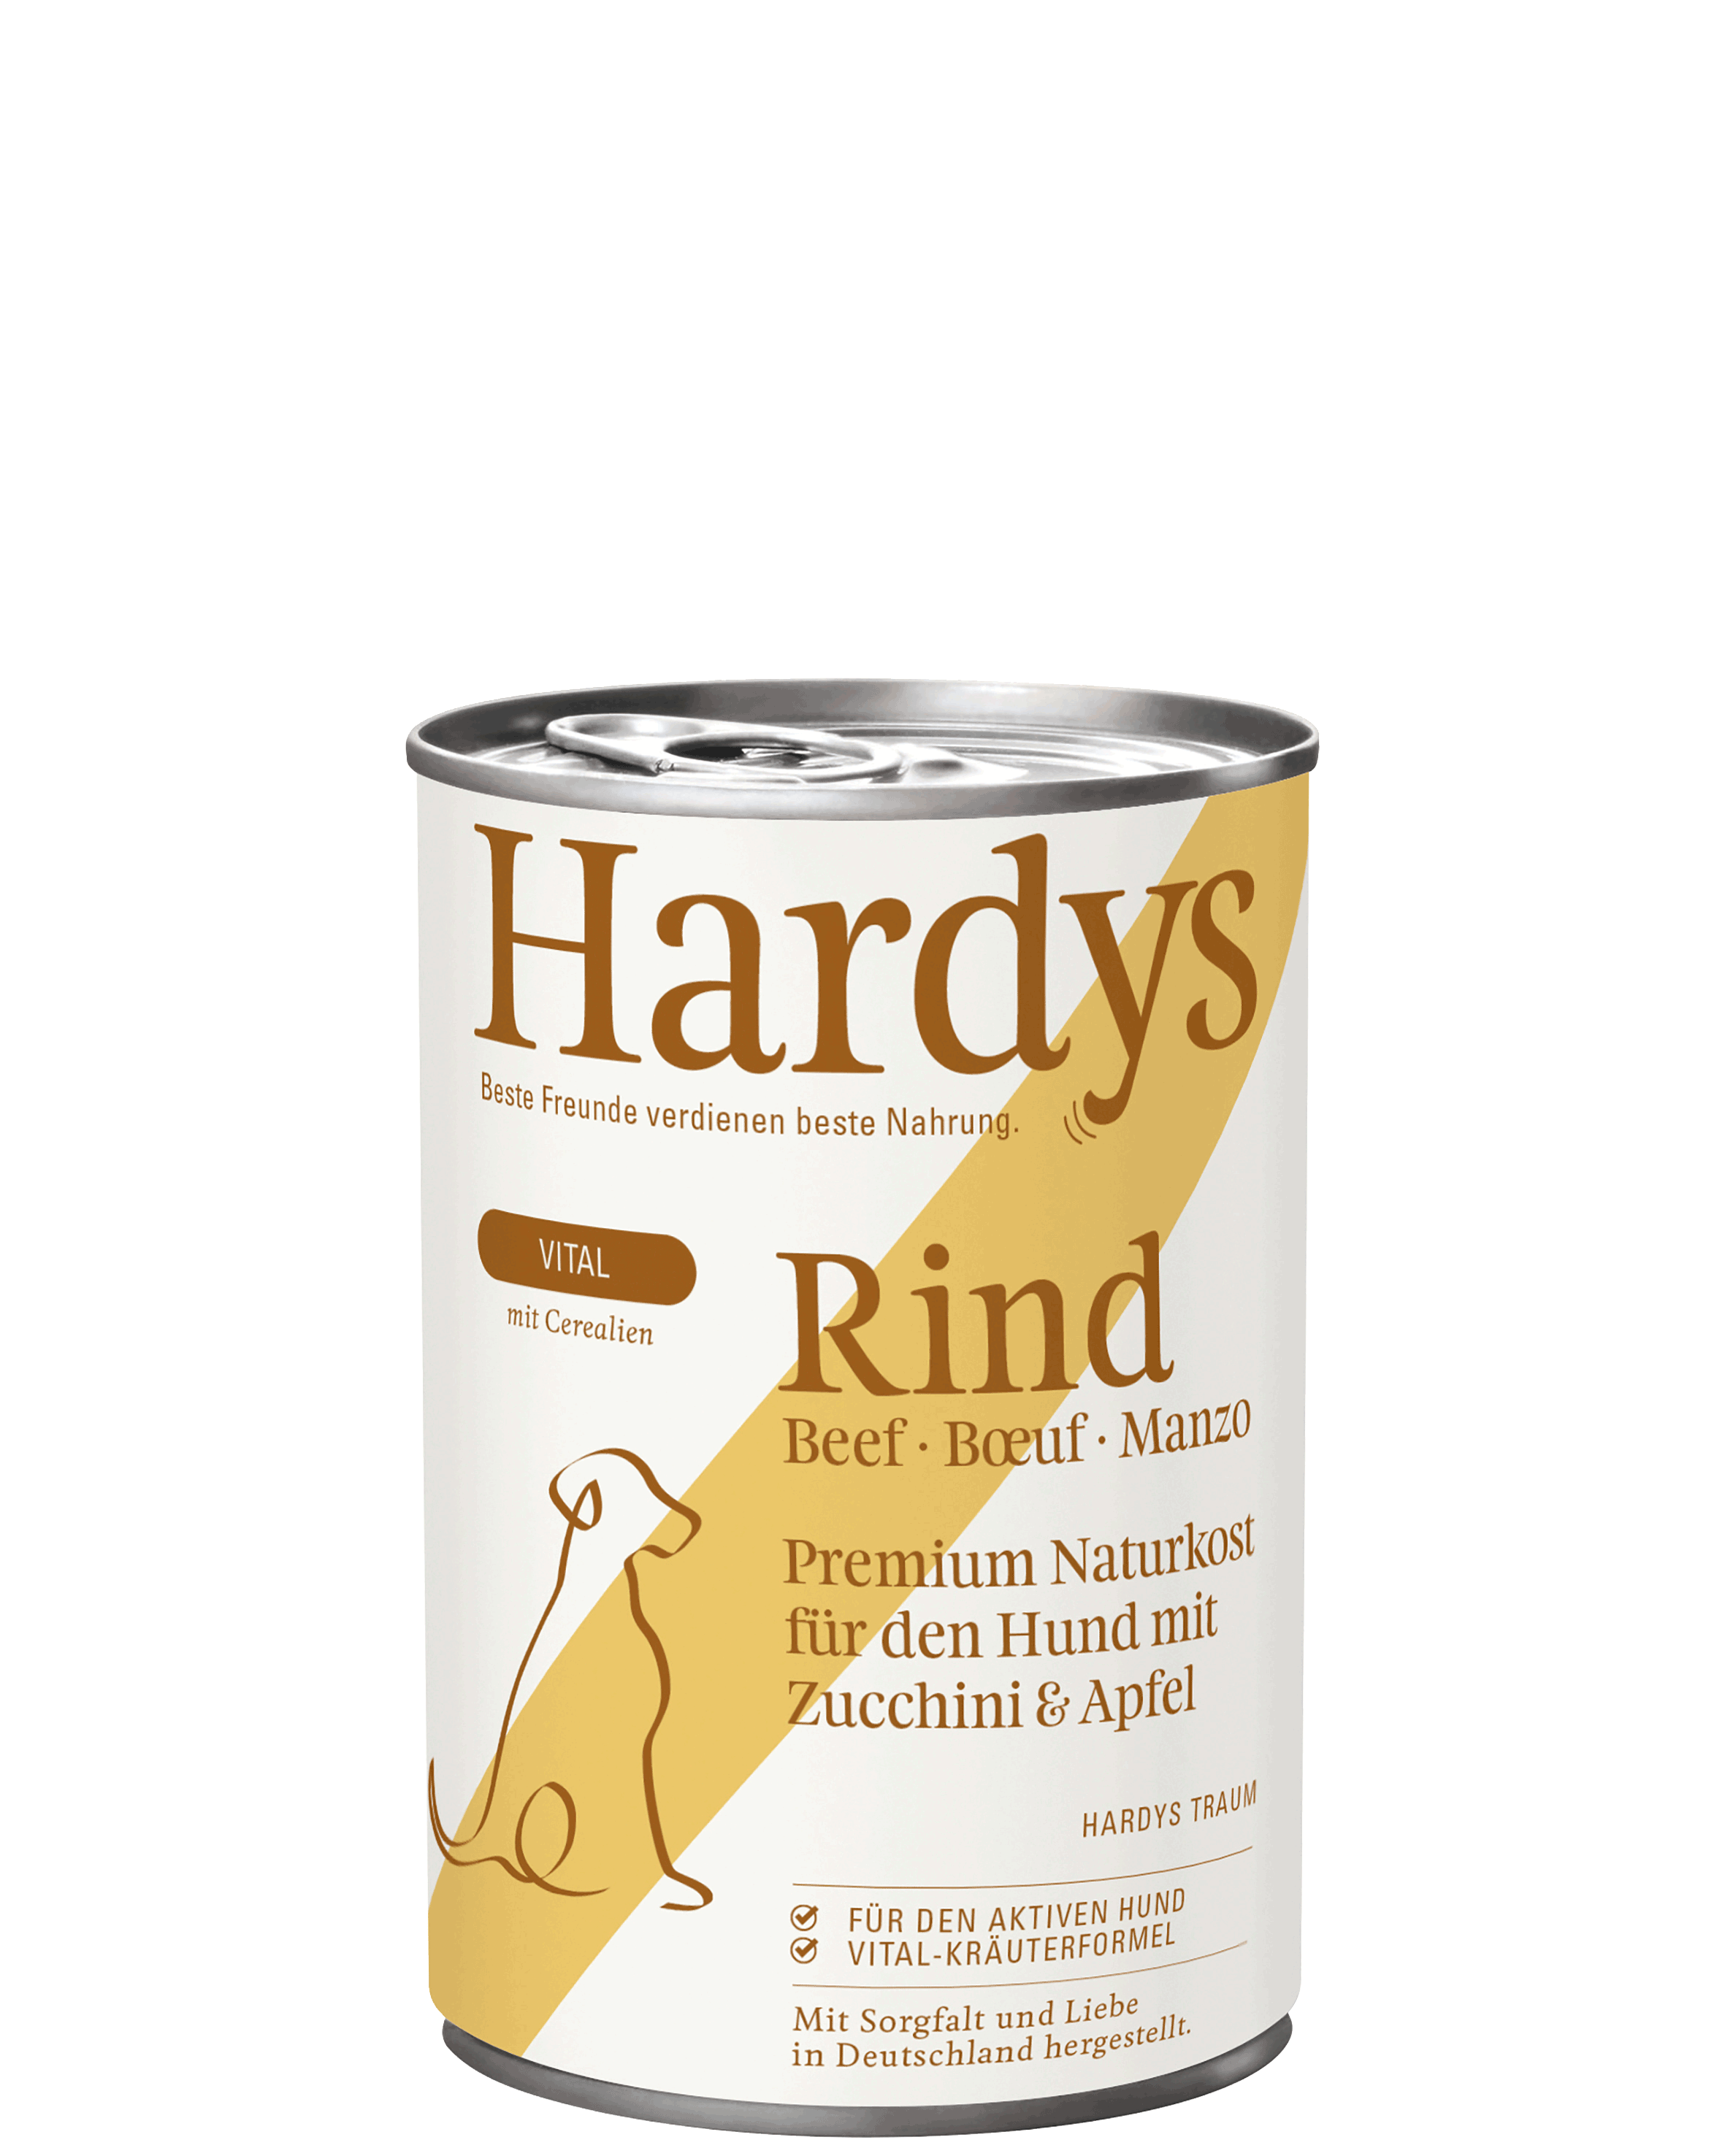 Hardys Vital Rind mit Zucchini & Apfel, 400 g